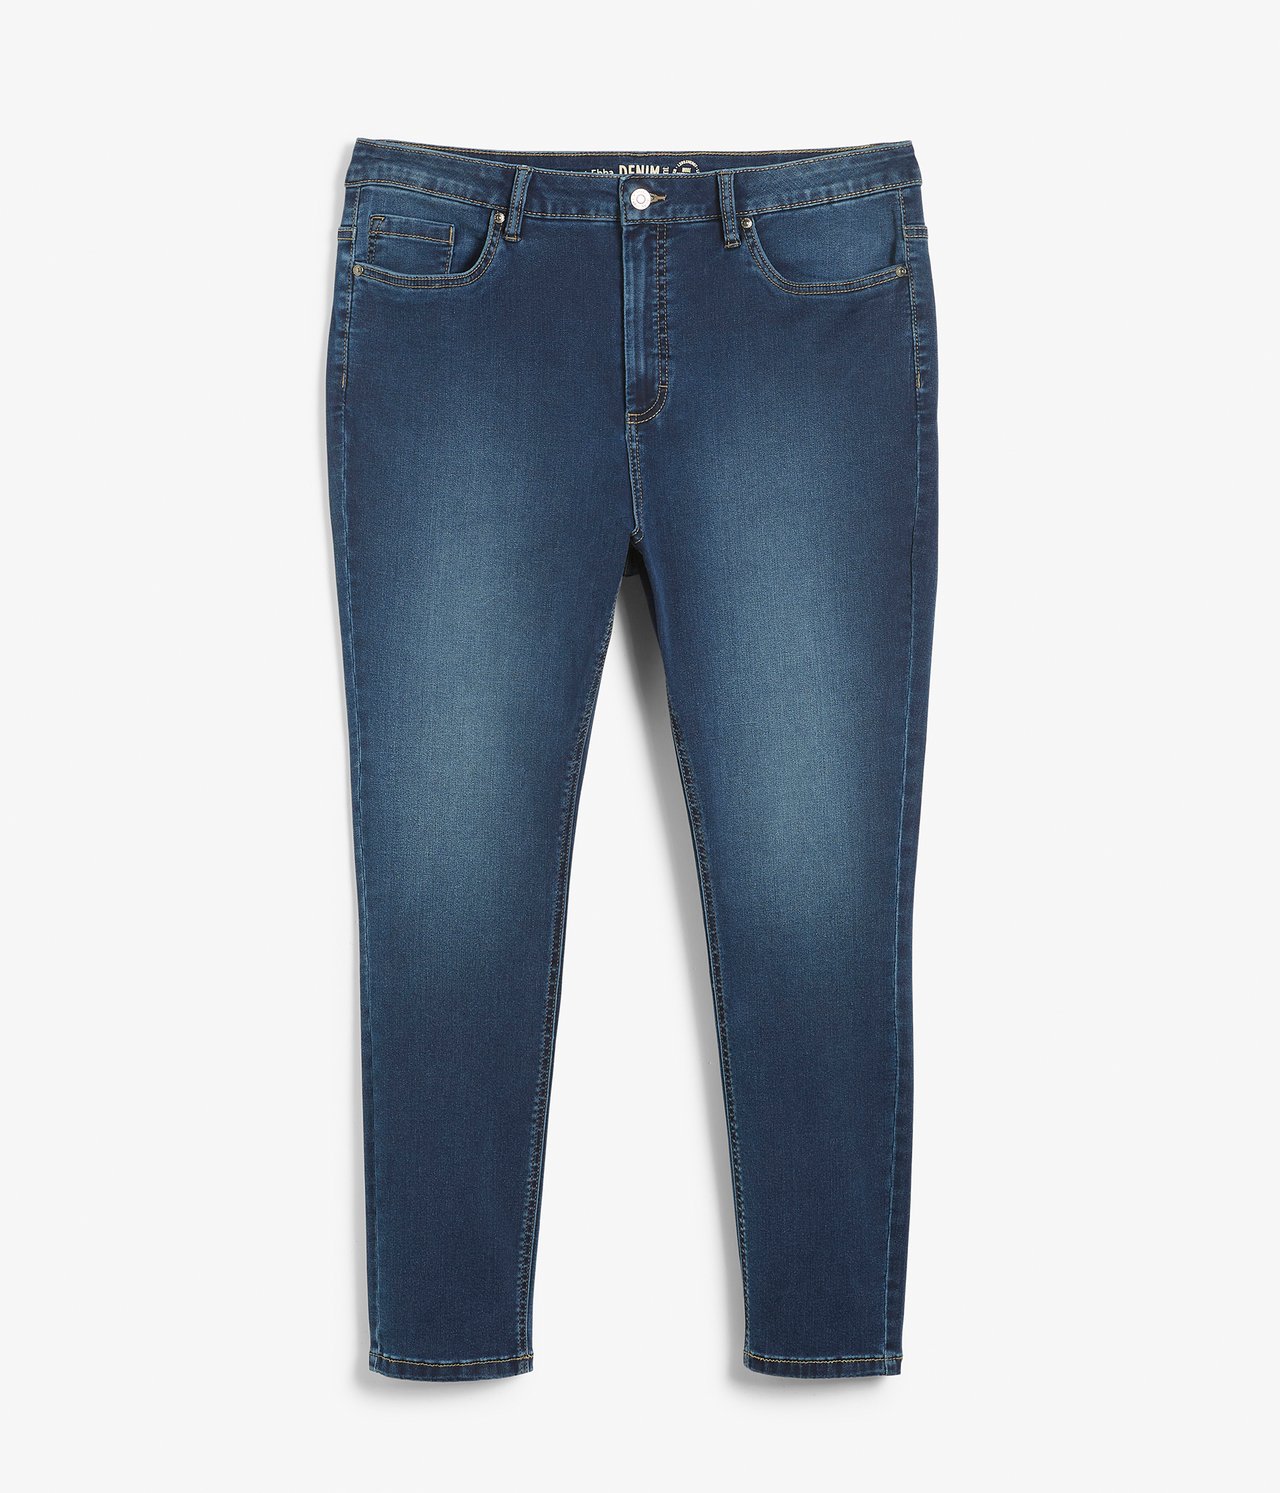 Ebba slim jeans short leg - Mörk denim - 6